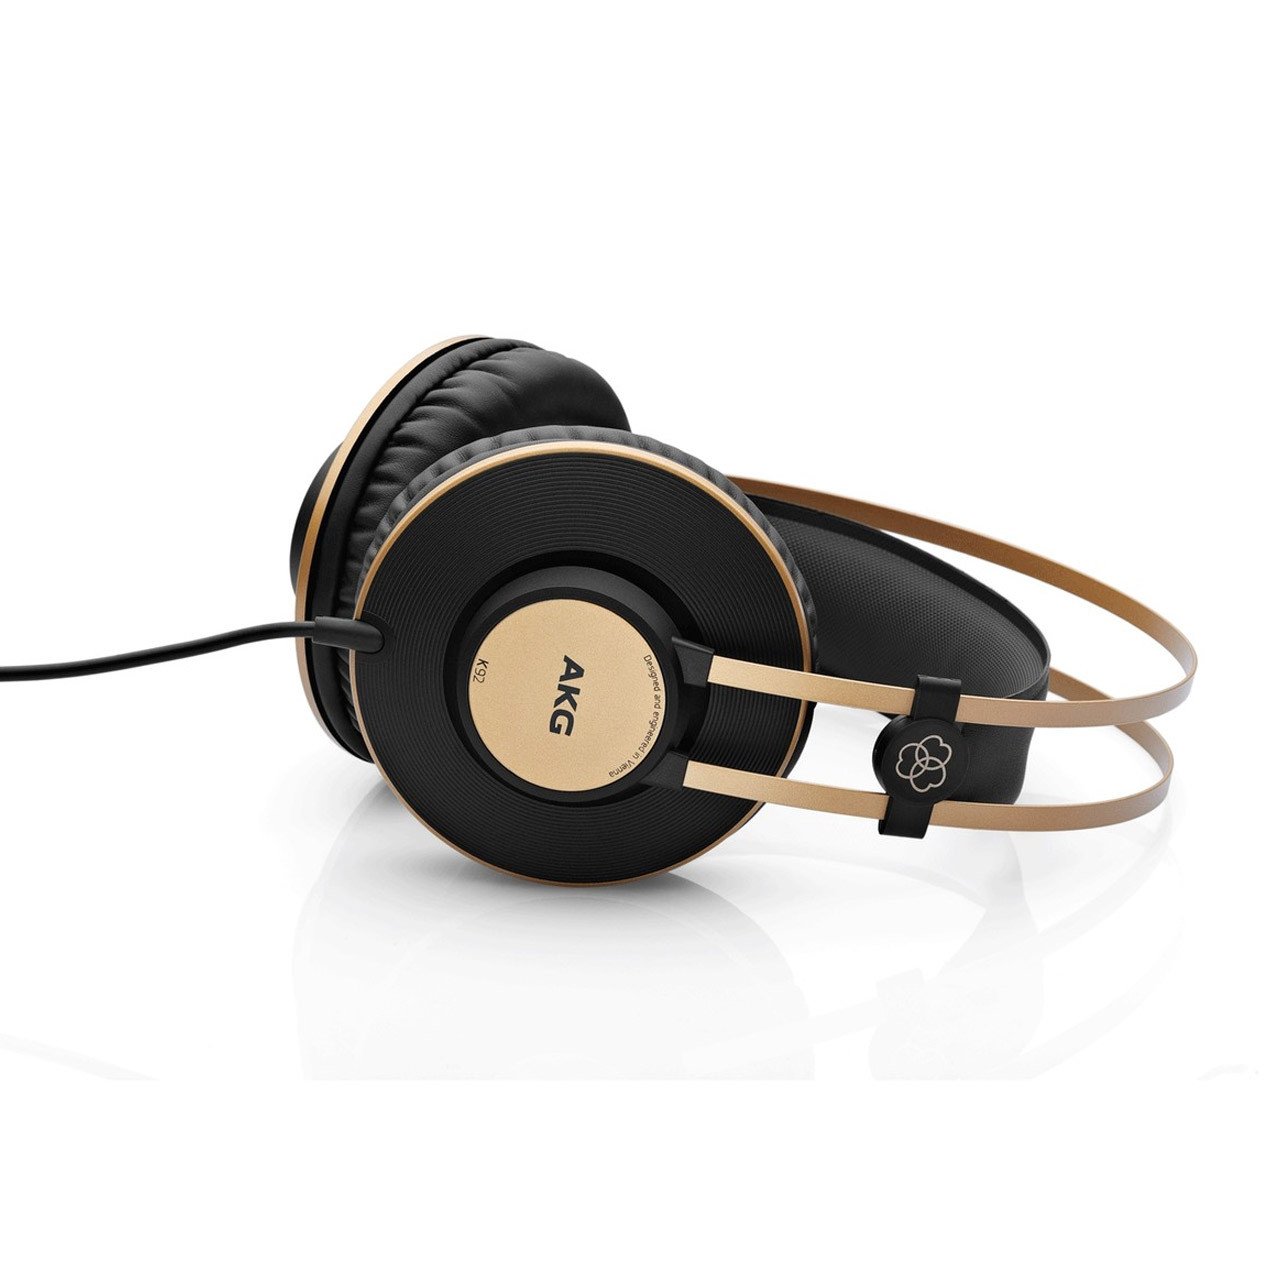 K361  Over-ear, closed-back, foldable studio headphones